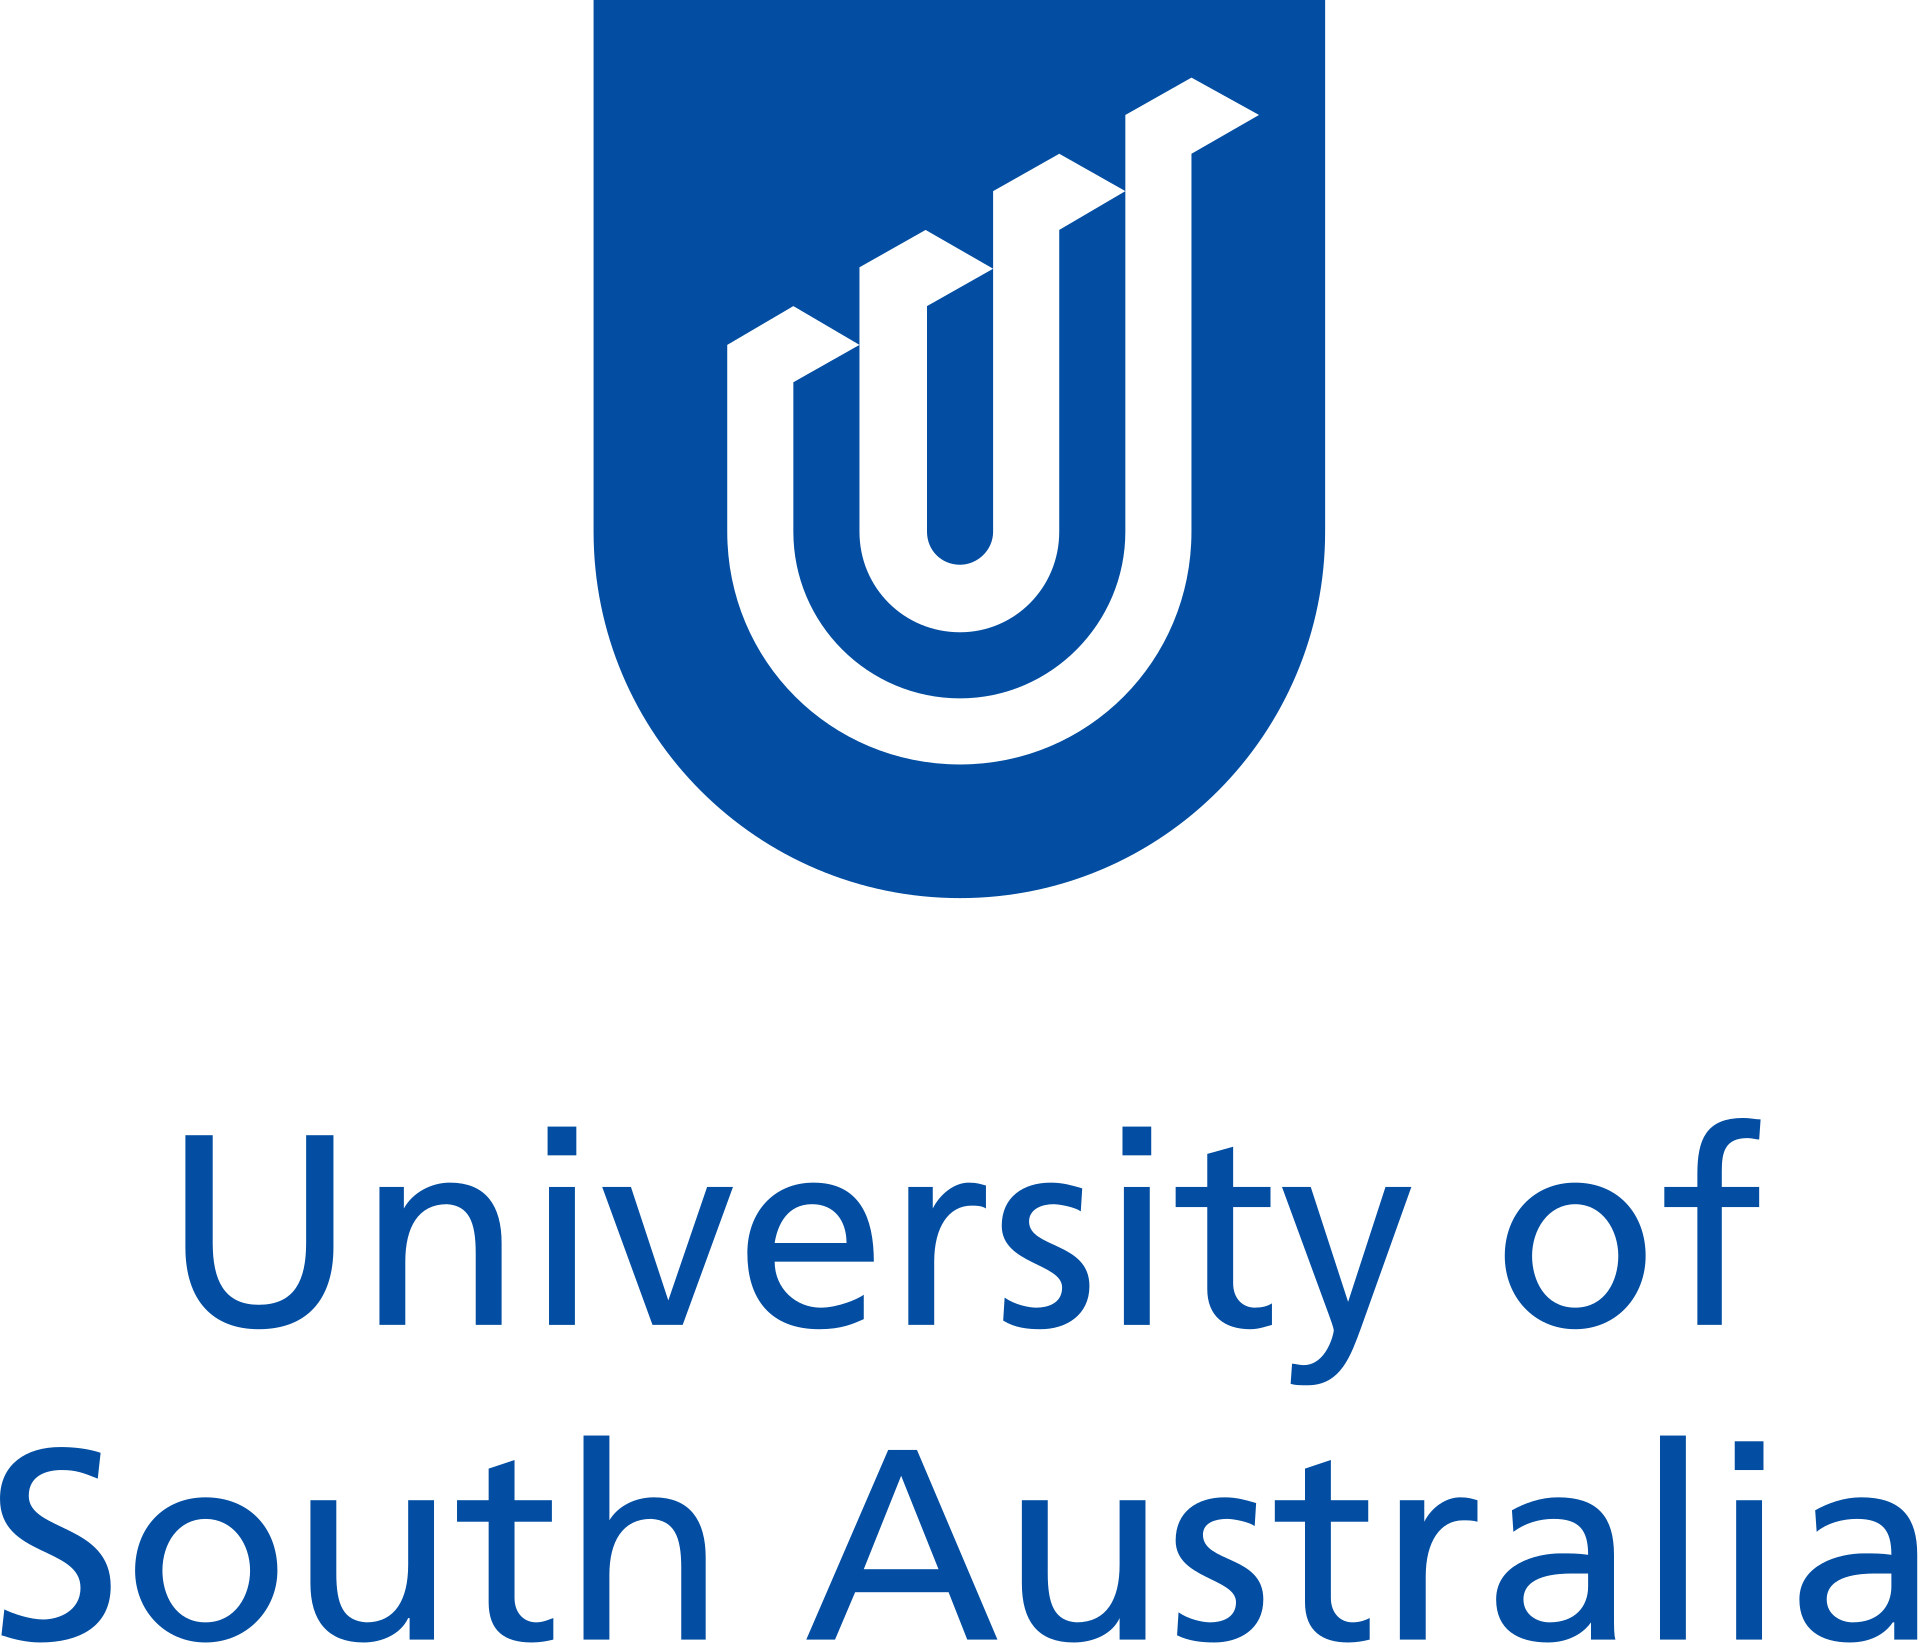 The logo for the University of South Australia.